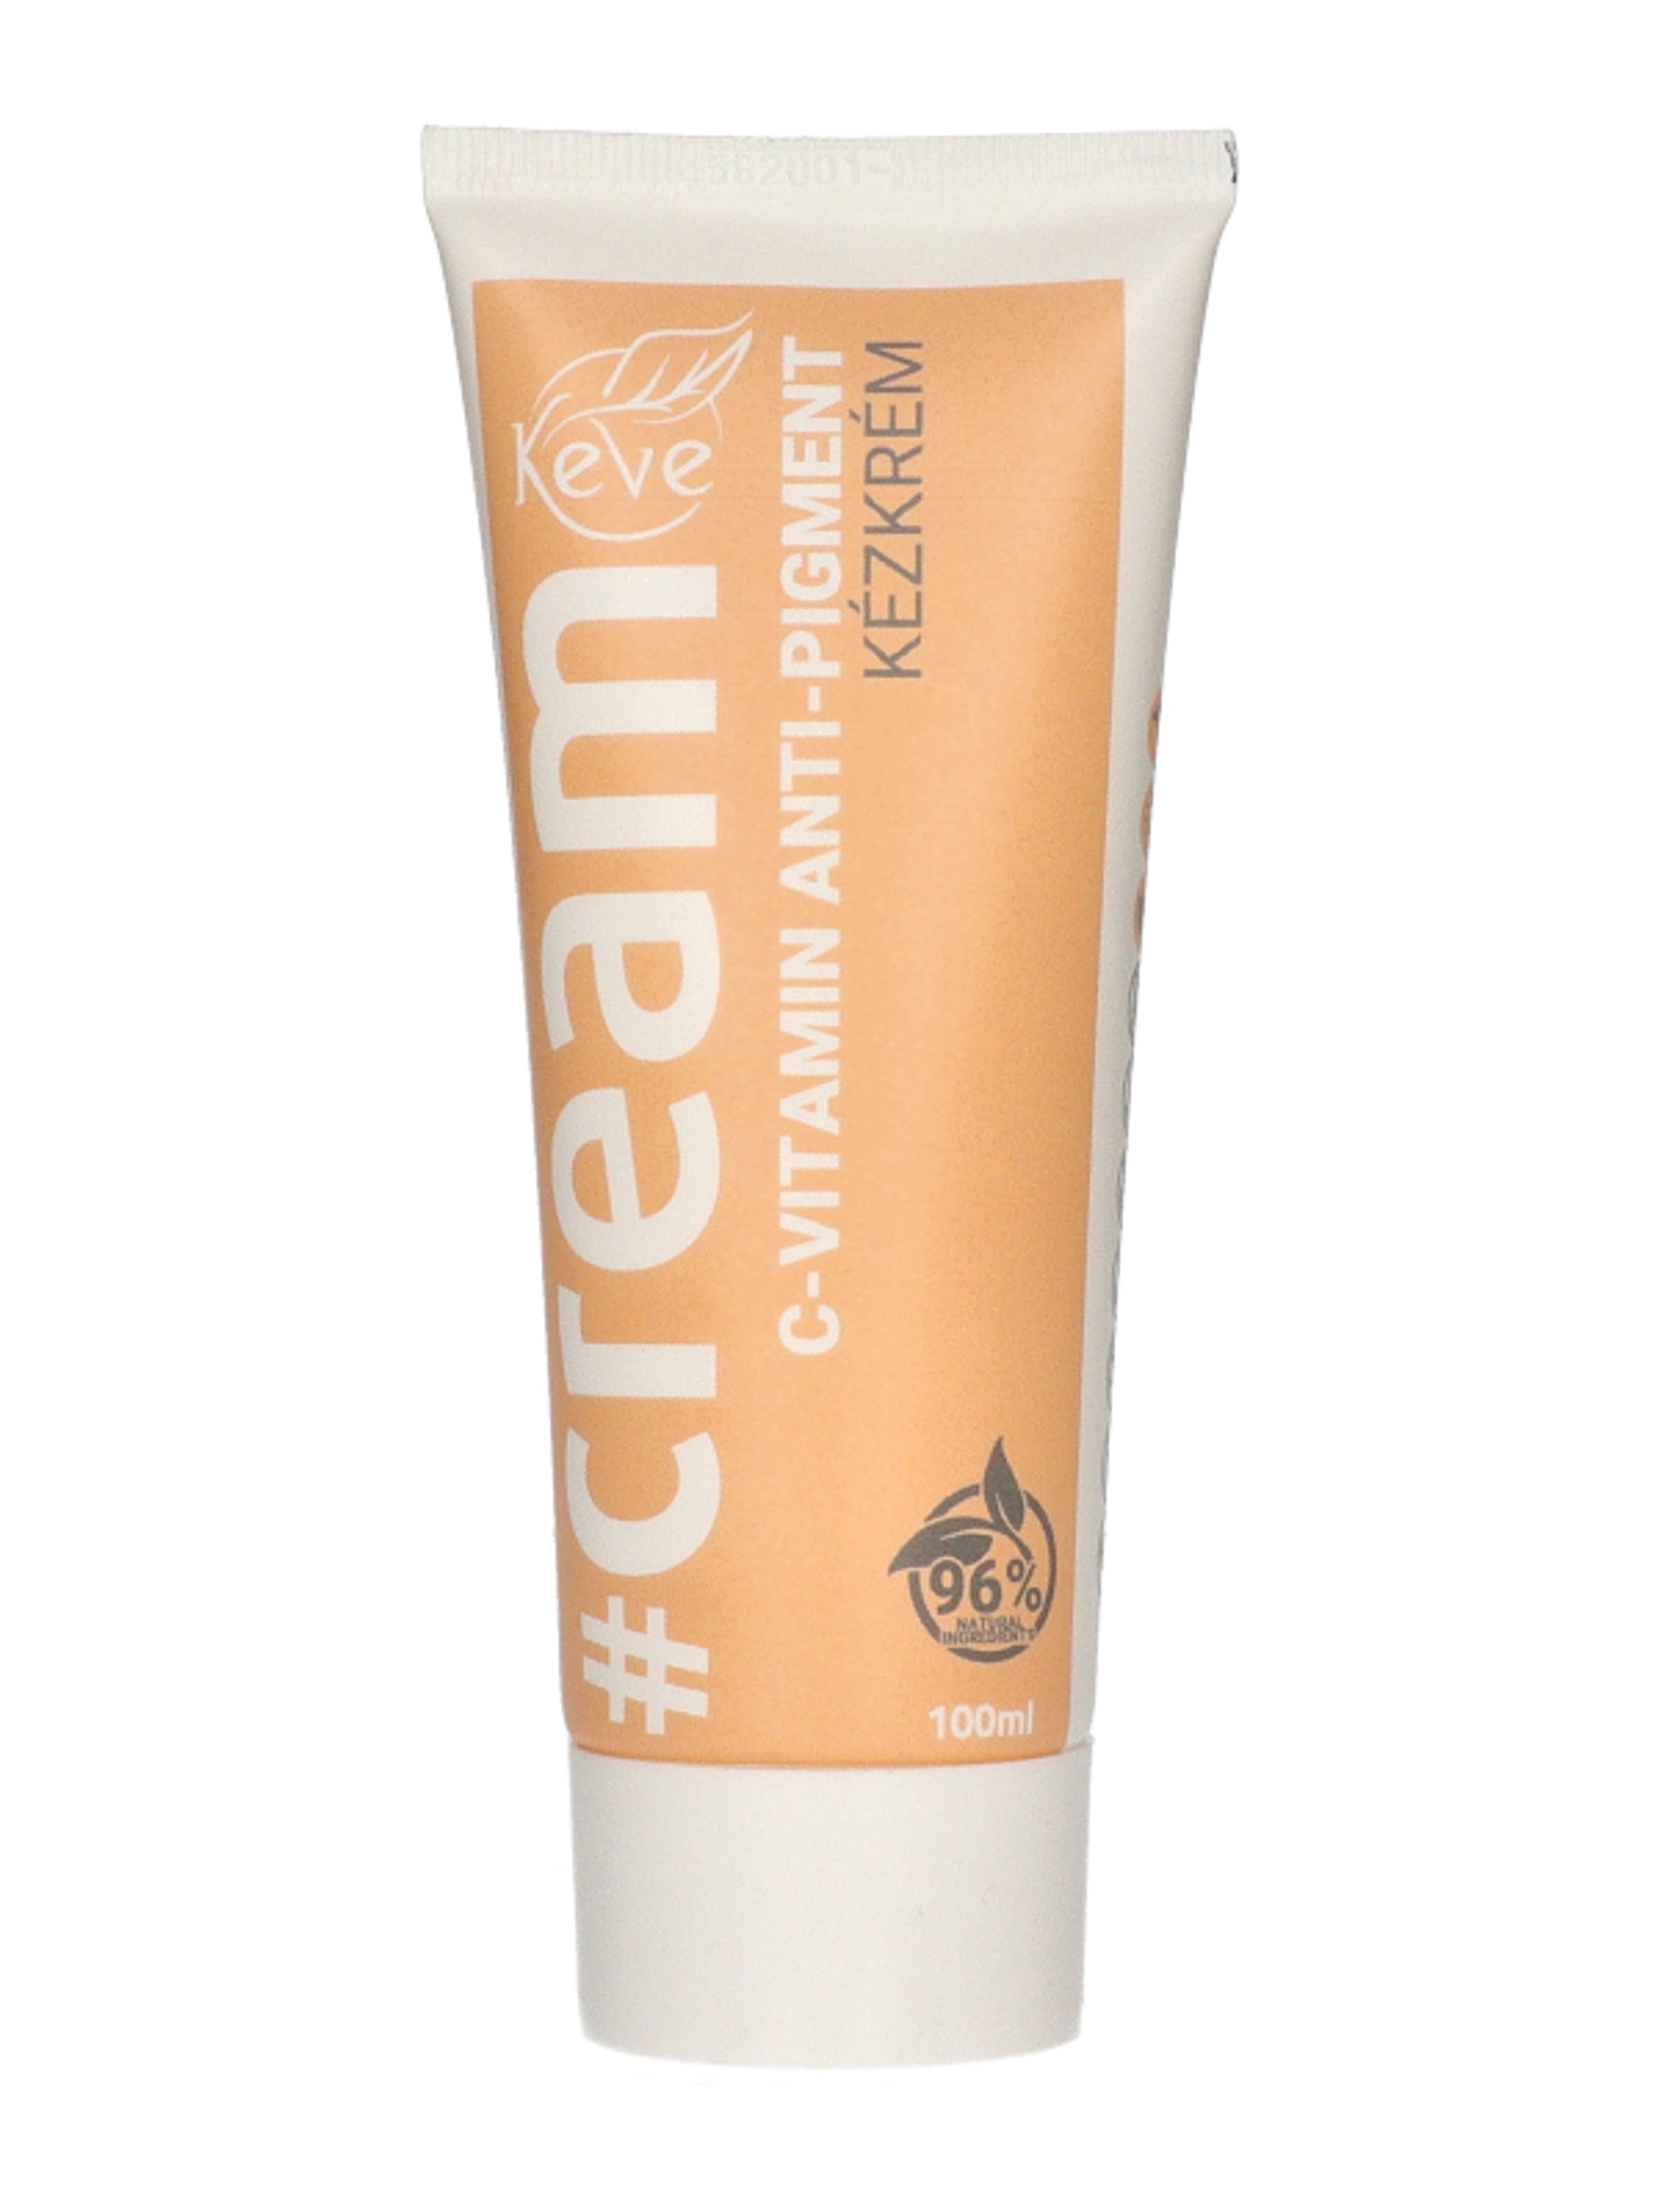 Keve #Creme Anti Pigment kézkrém C-vitaminnal - 100 ml